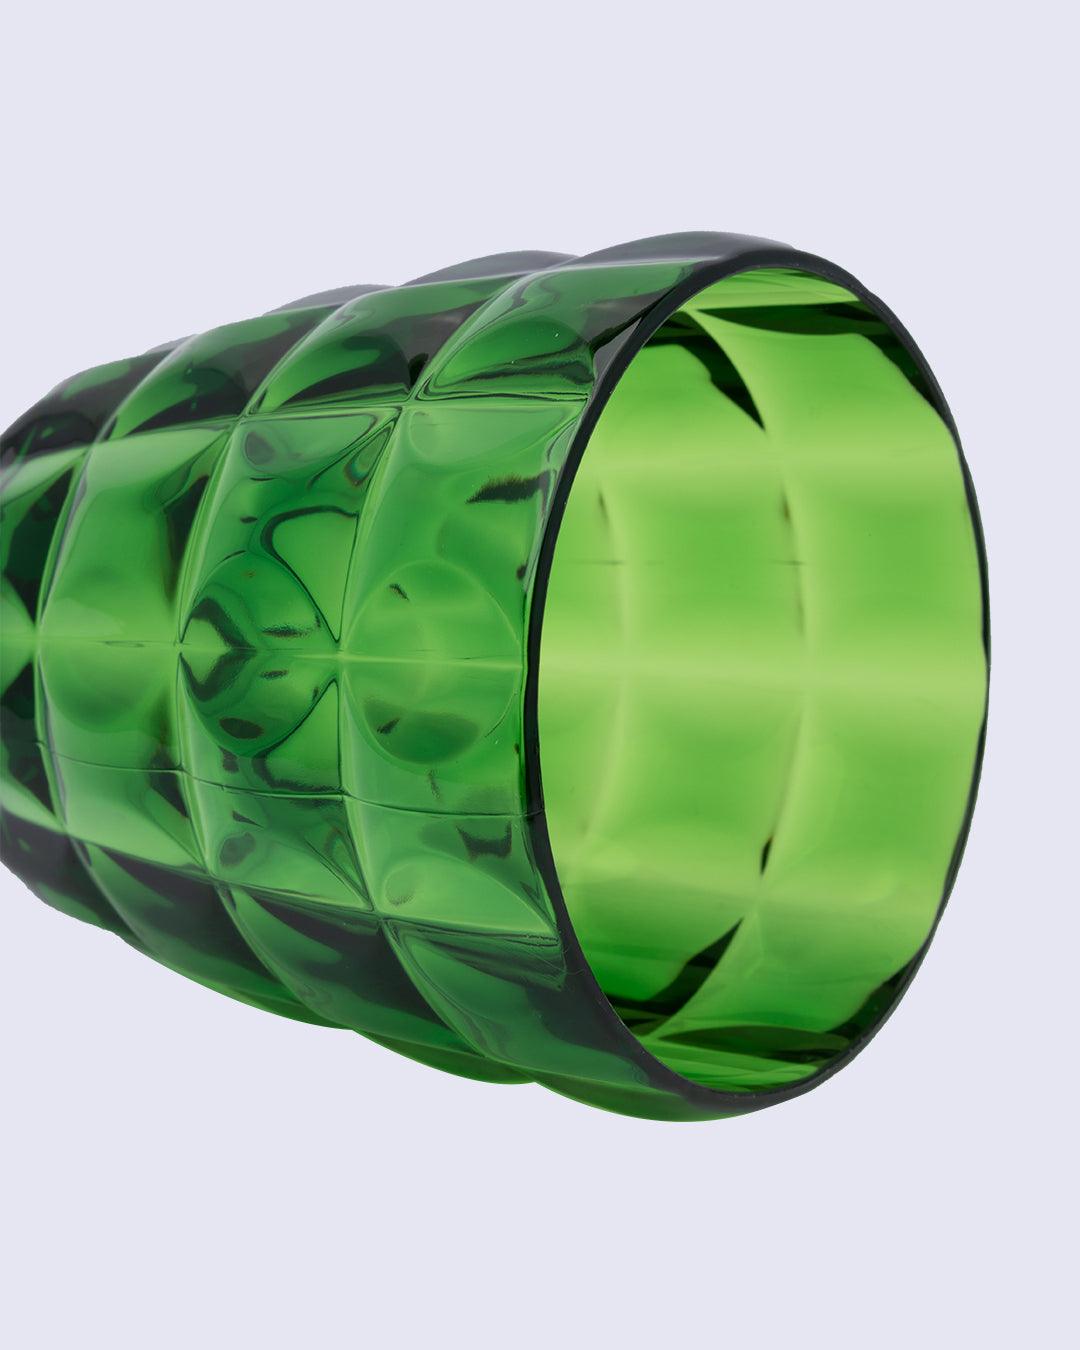 Tumblers, Glass Set, Green Colour, Plastic, Set of 3, 400 mL Each - MARKET 99